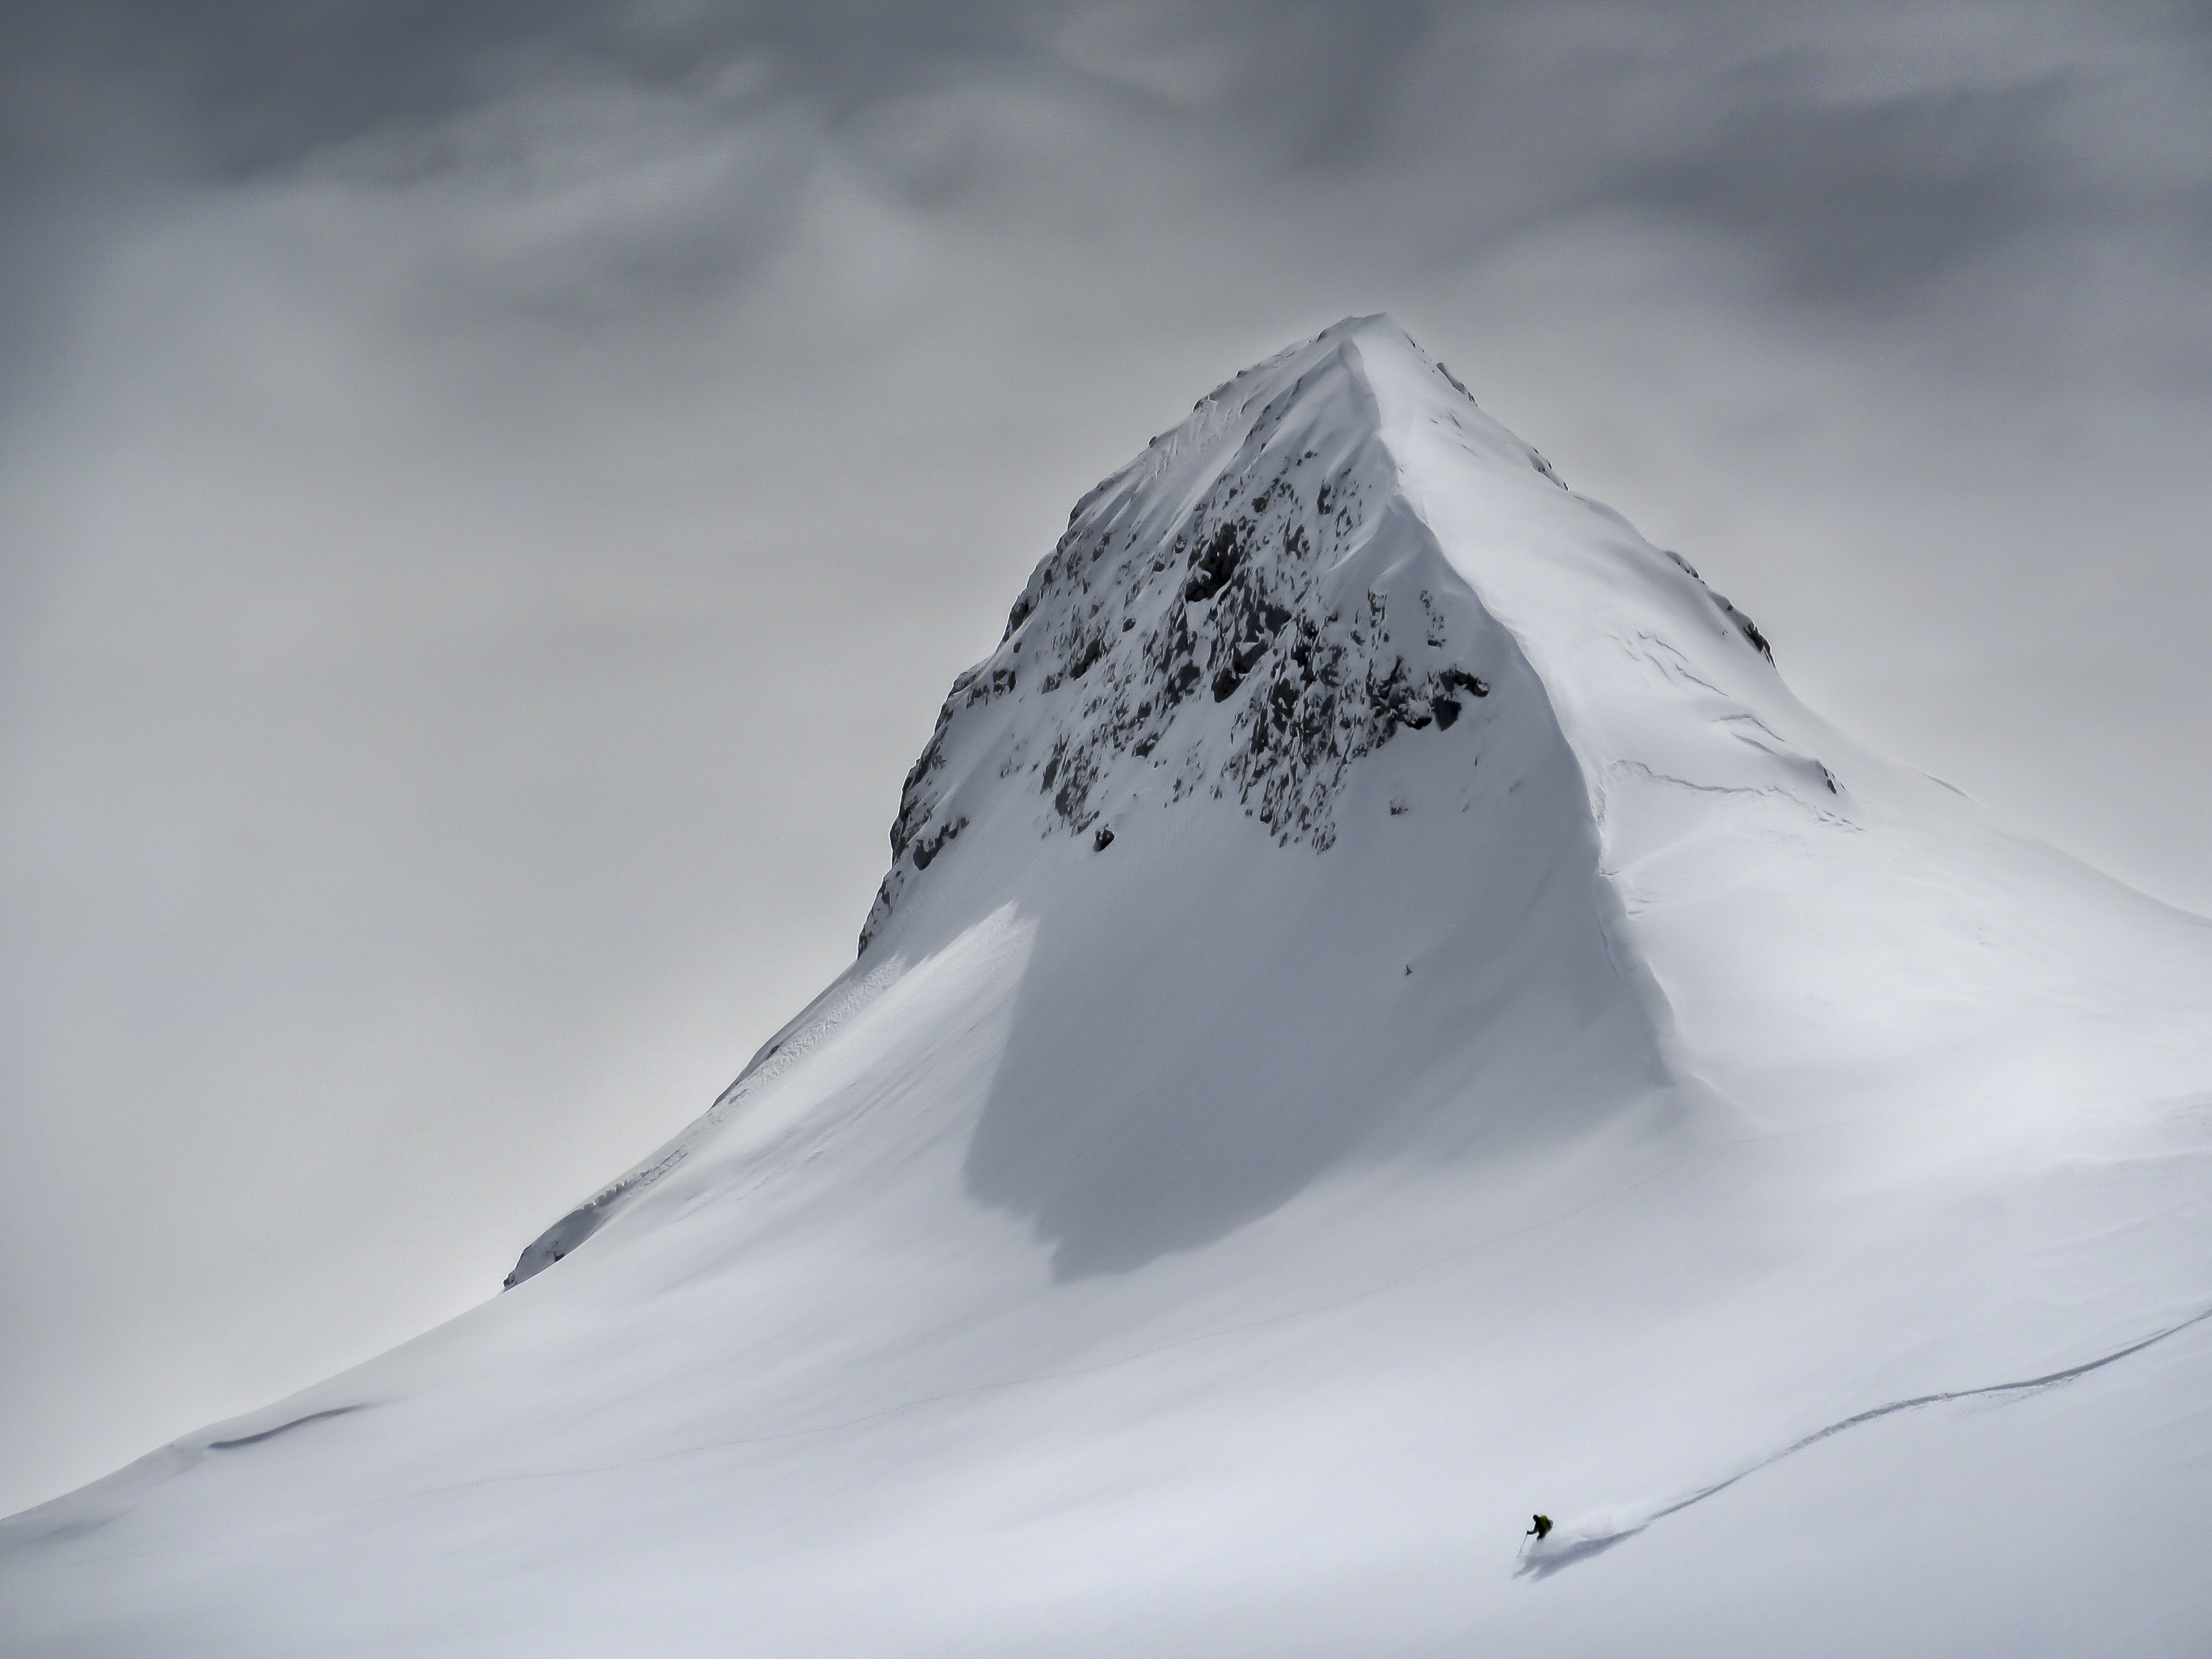 Skier heading down a mountain slope in Slovenia (Colin Ronald, Austria)